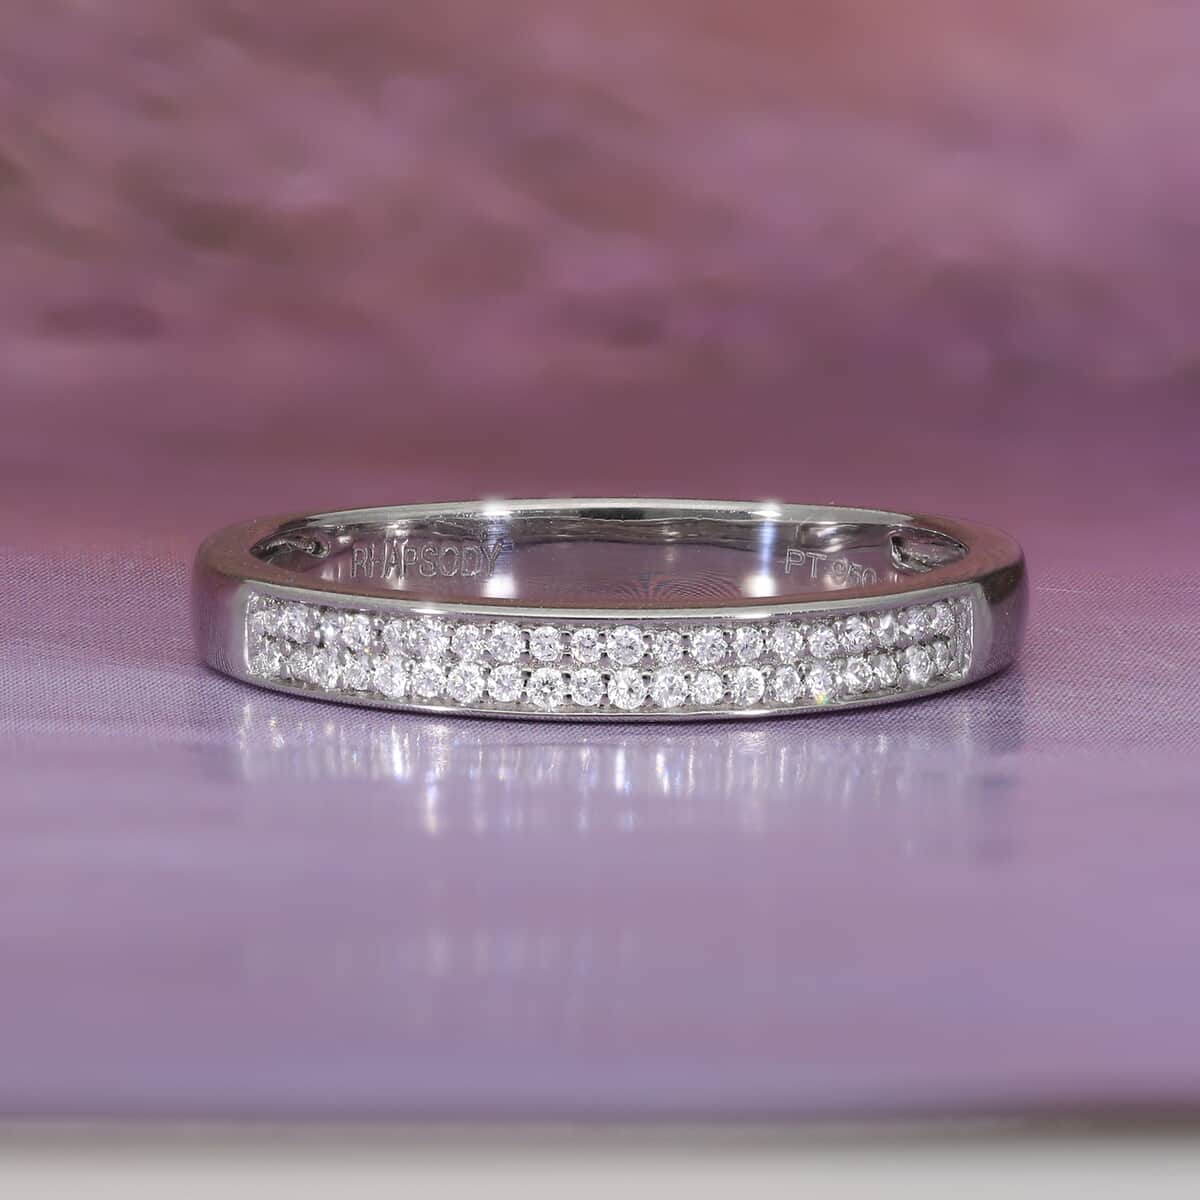 RHAPSODY IGI Certified 950 Platinum E-F VS Diamond Ring (Size 7.0) 5 Grams 0.18 ctw image number 1